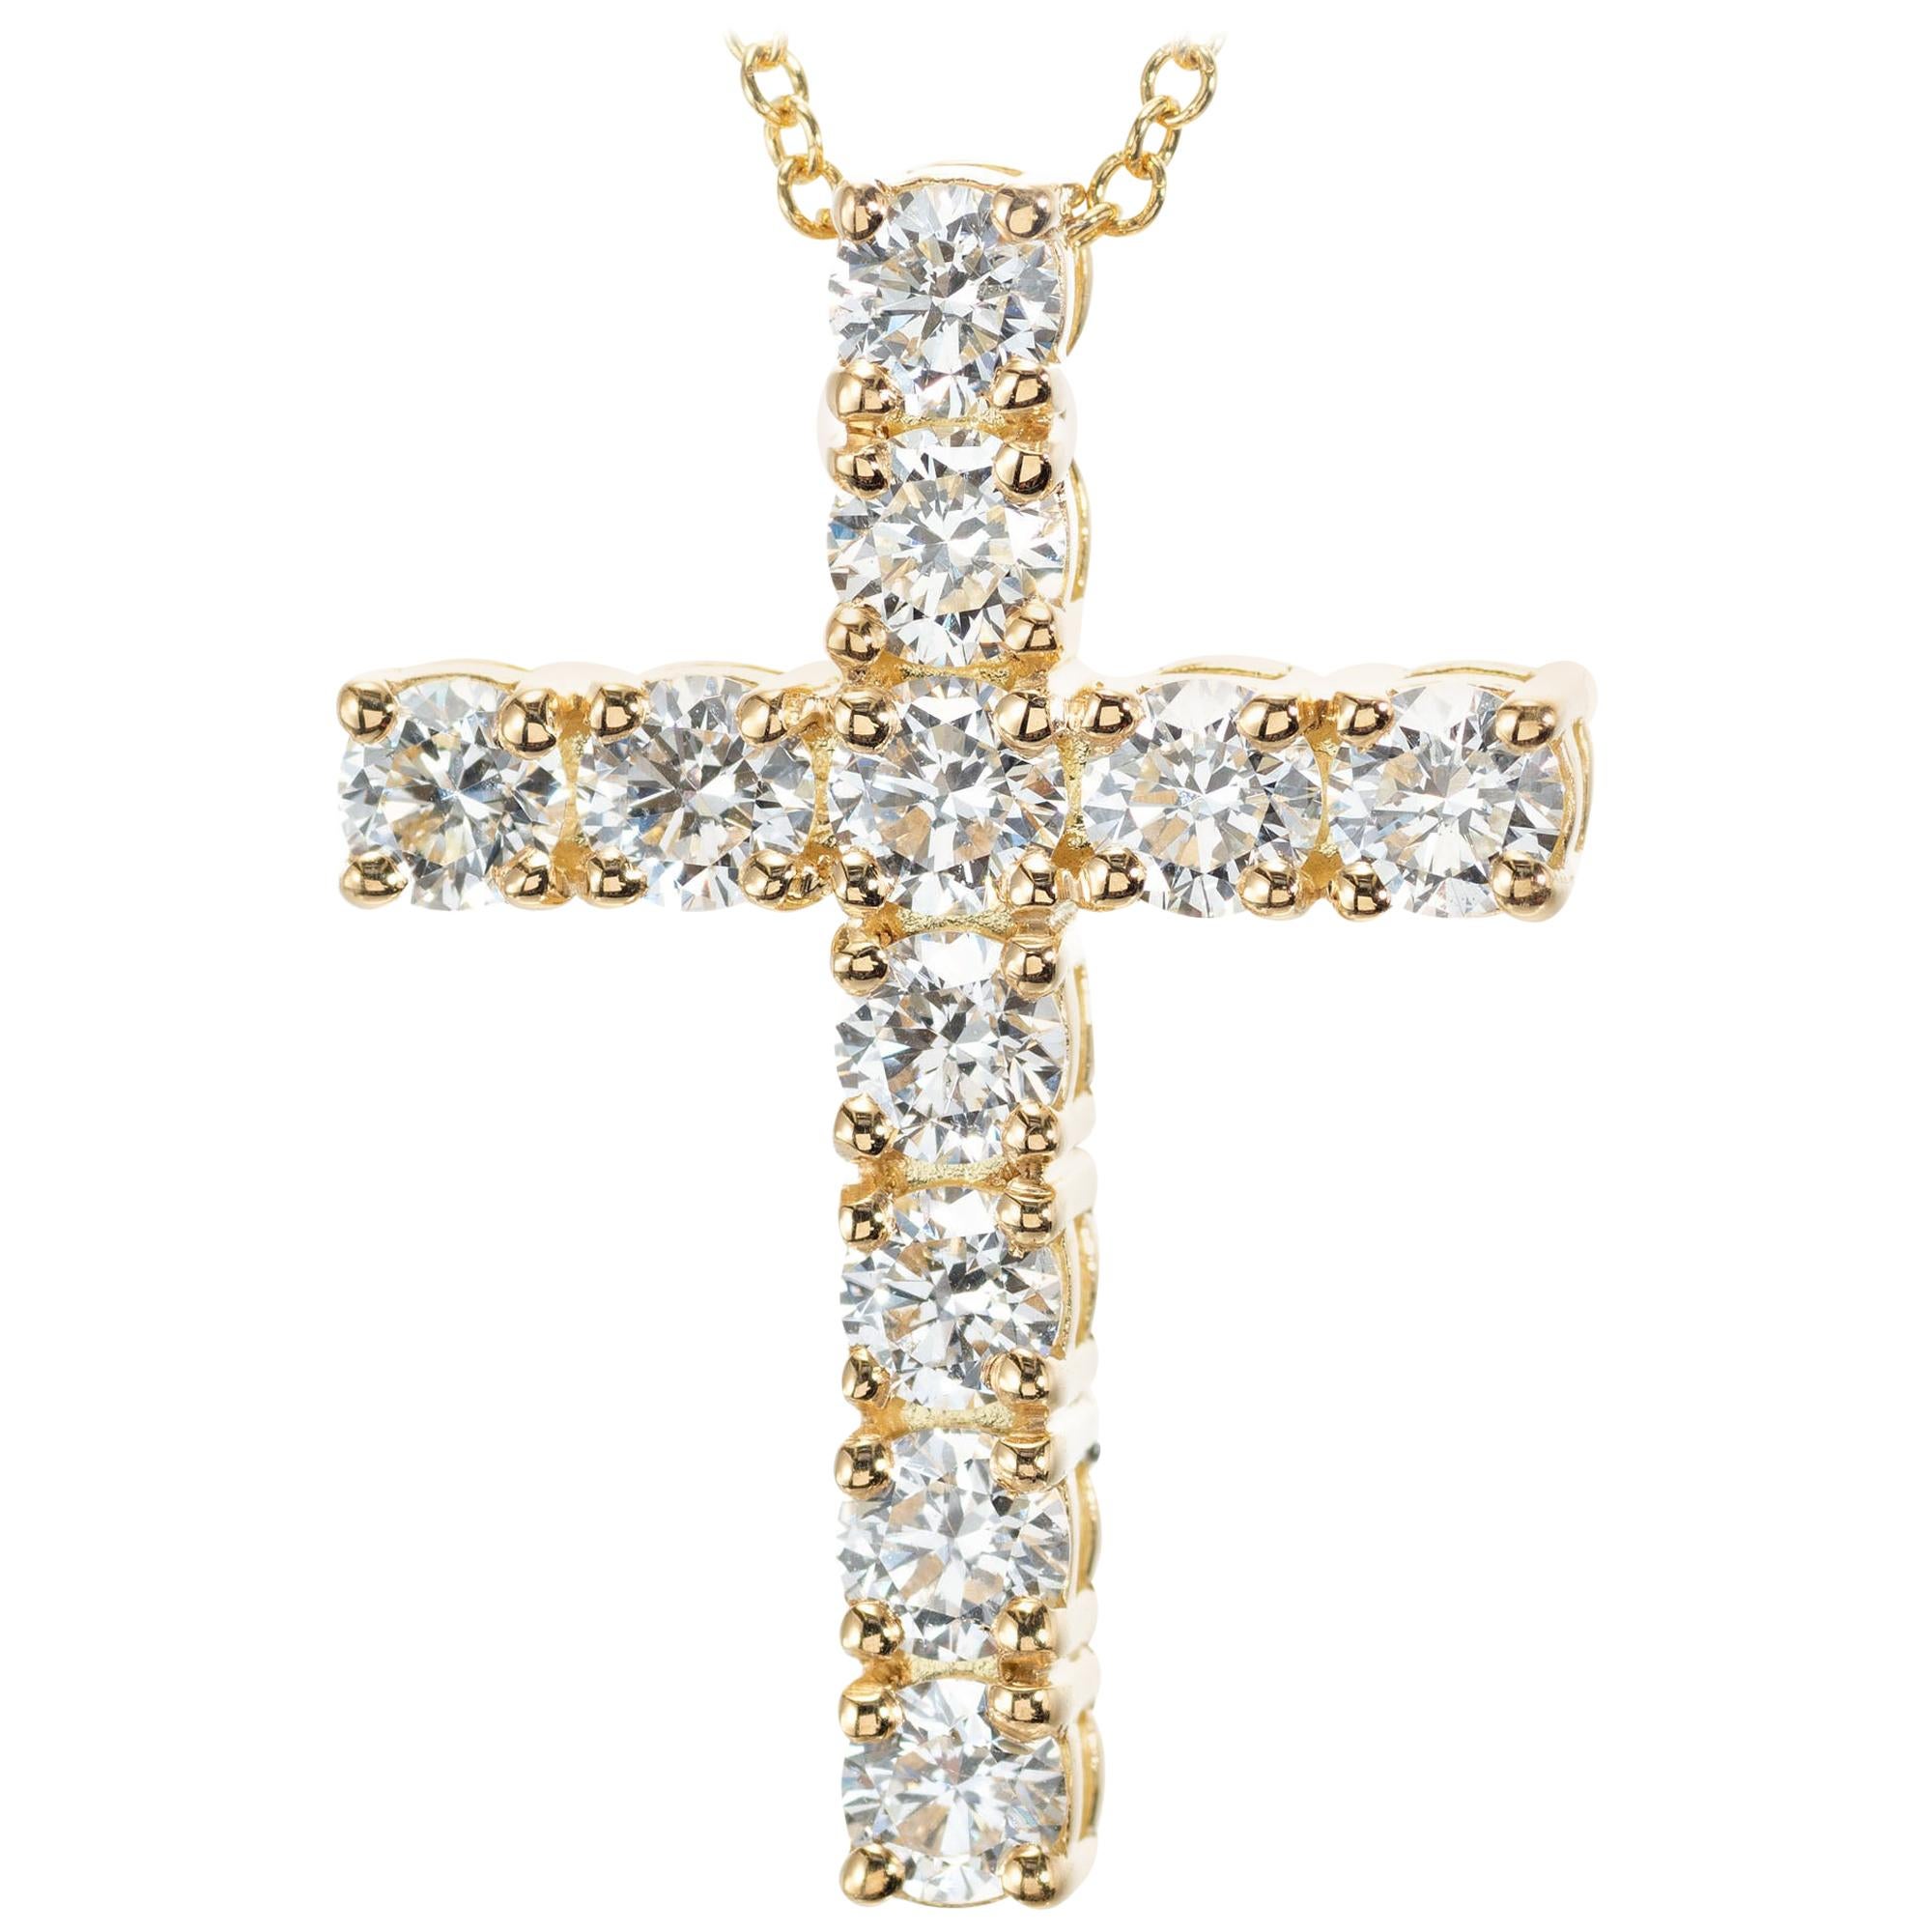 Peter Suchy 1.15 Carat Diamond Yellow Gold Cross Pendant Necklace